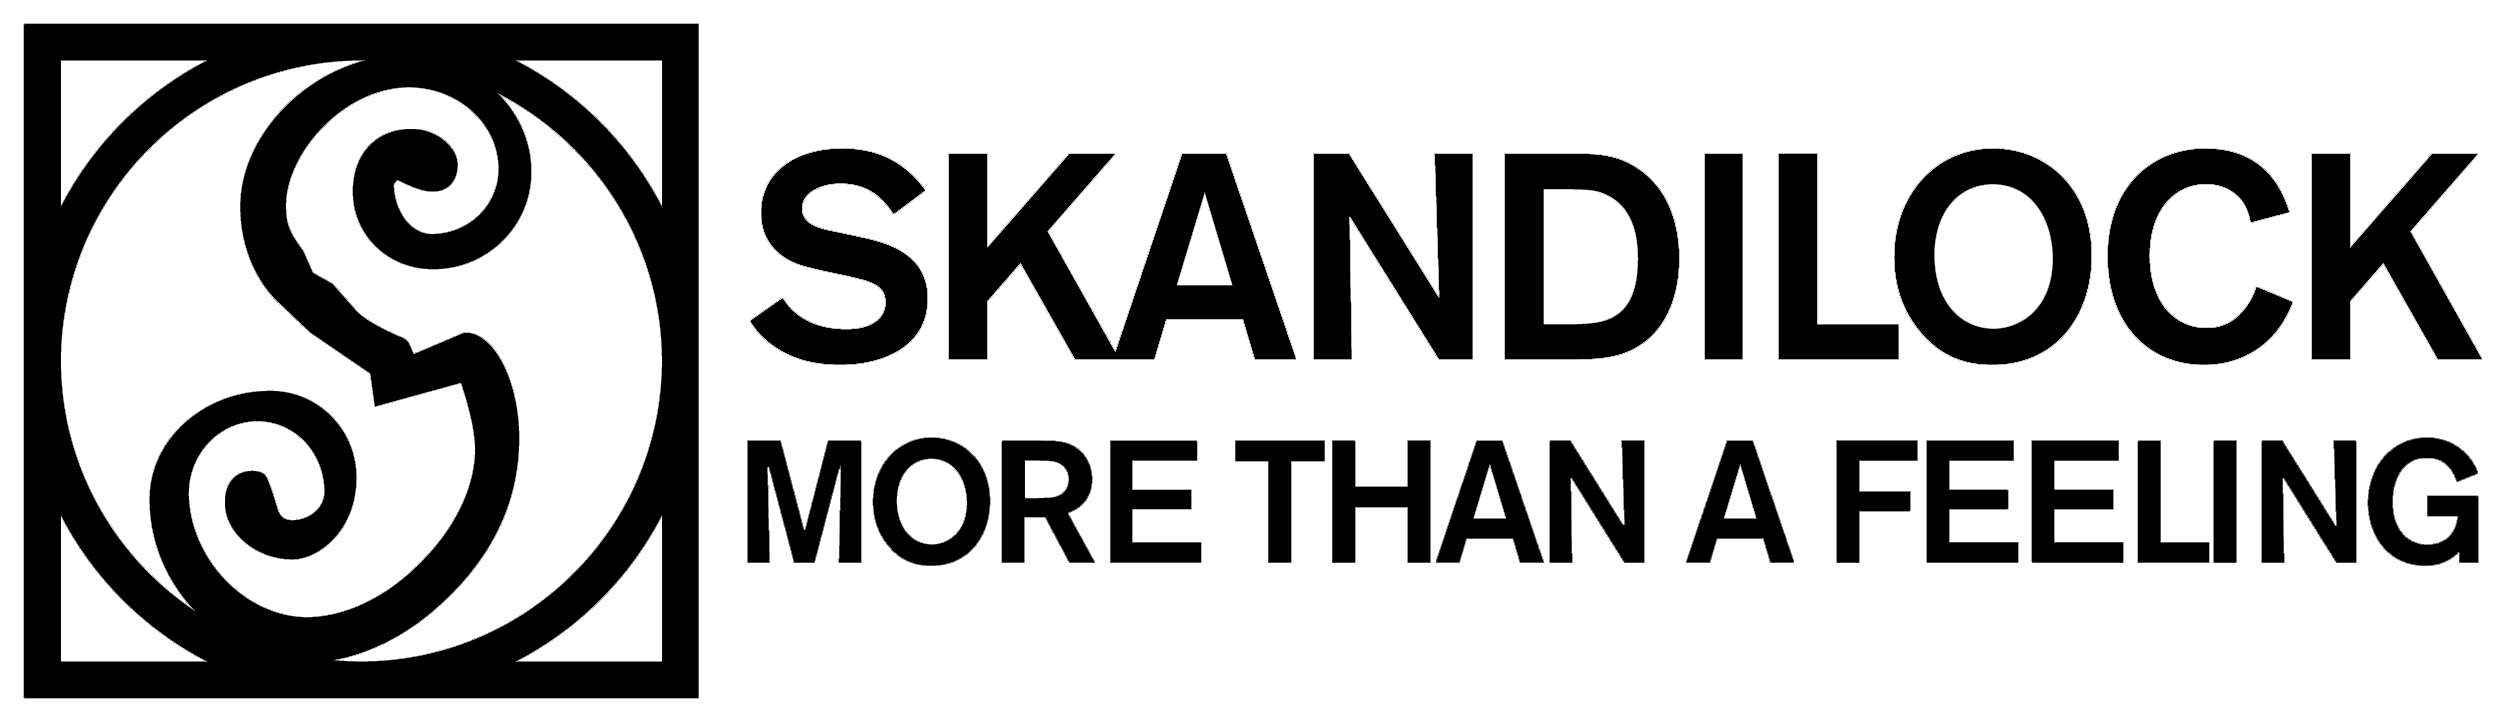 Skandilock logo